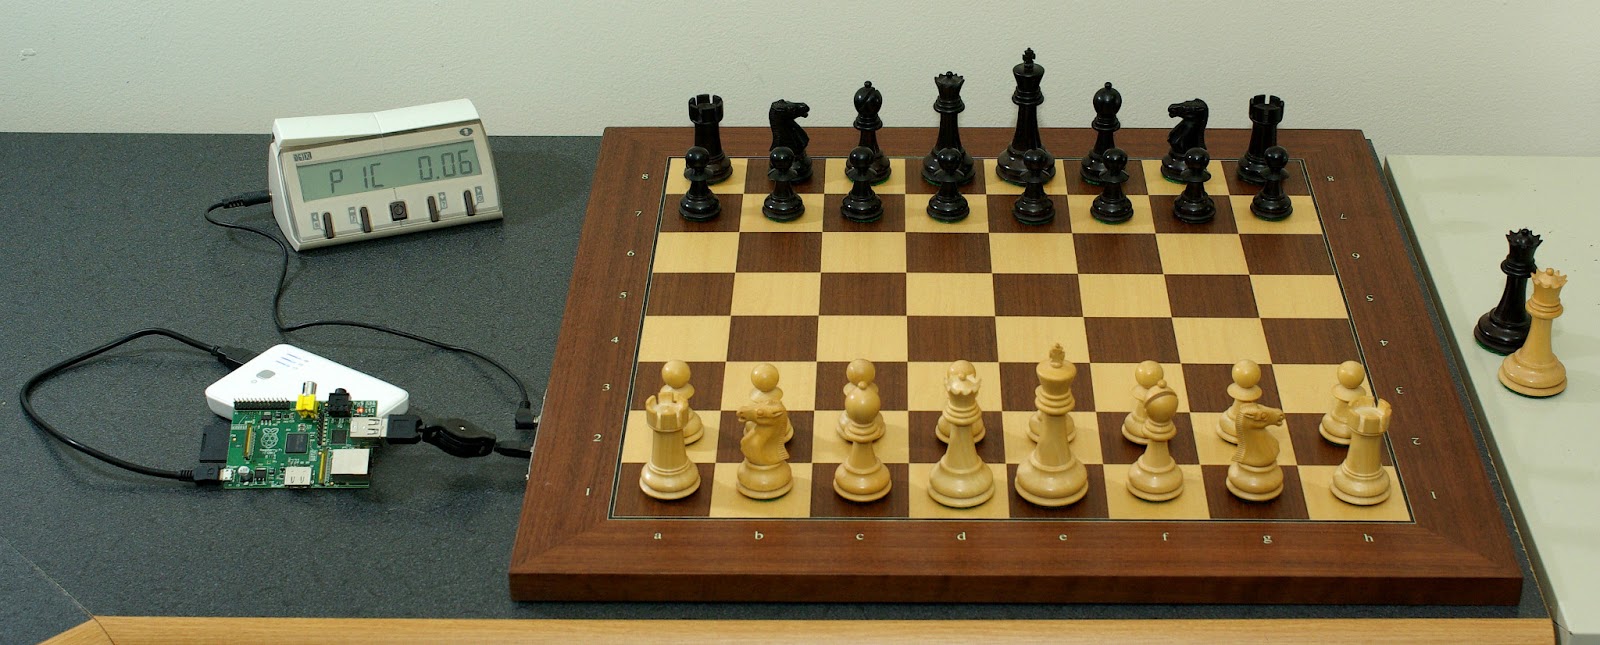 Шахматная доска на компьютере. Электронная доска DGT шахматная. Шахматный компьютер DGT Pi. Доски электронные шахматные DGT (USB-порт). Доски для шахмат DGT.